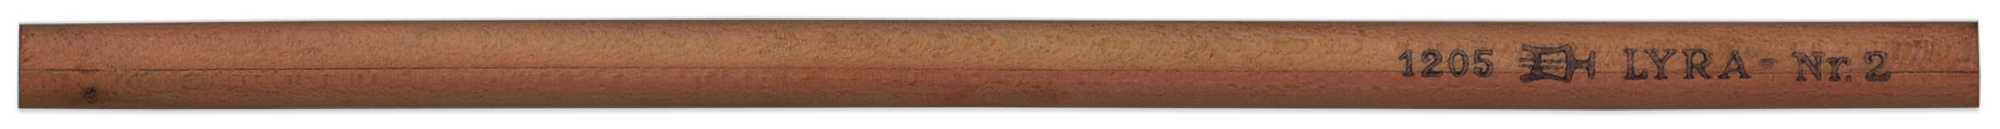 Lyra 1205 No.2 by LYRA Pencil Co. | Brand Name Pencils